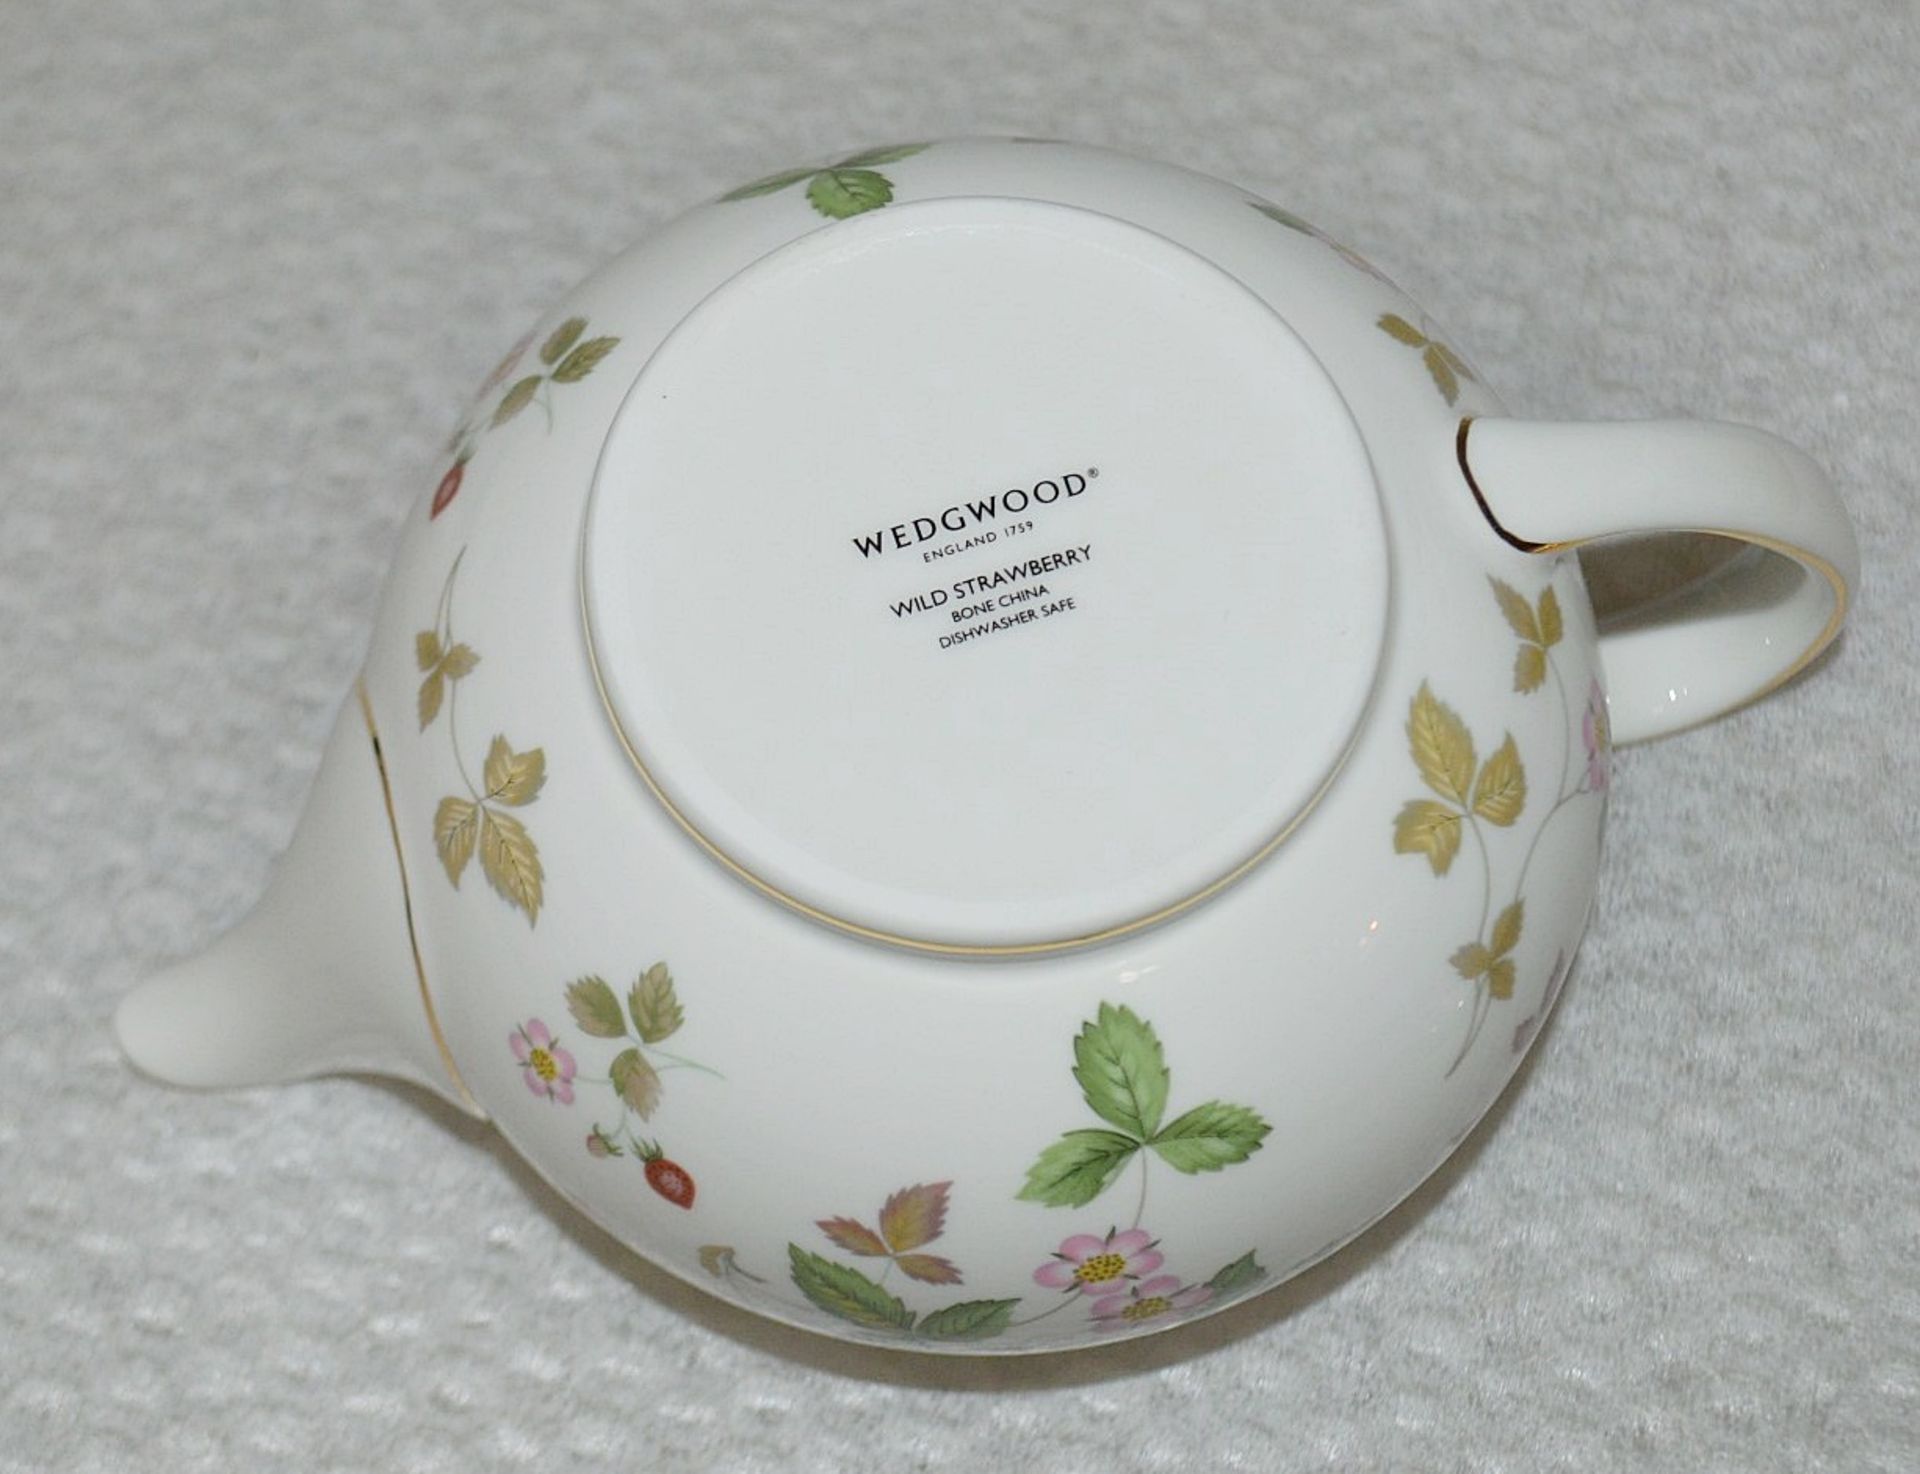 1 x WEDGWOOD Small Wild Strawberry Teapot Featuring A 22-Karat Gold Rim - Read Full Description - Image 6 of 8